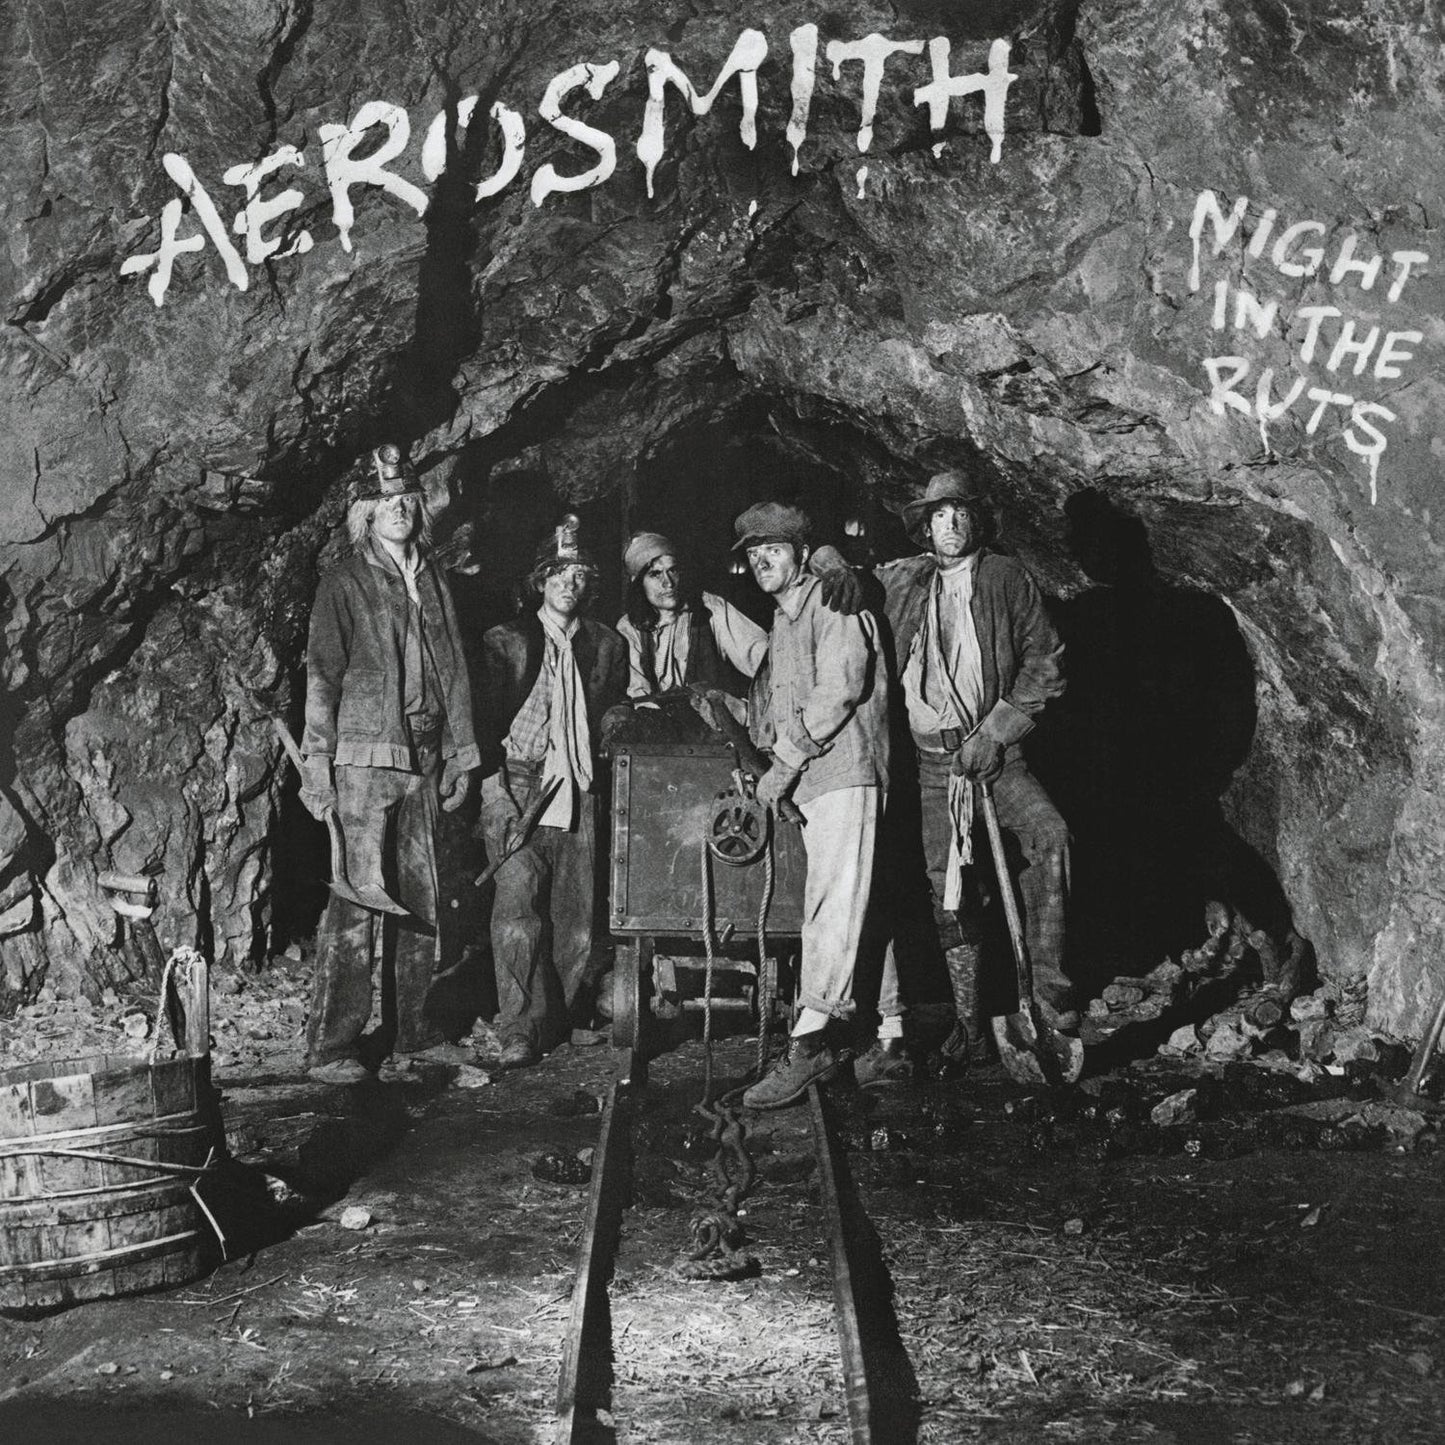 Aerosmith/Night In The Ruts [LP]